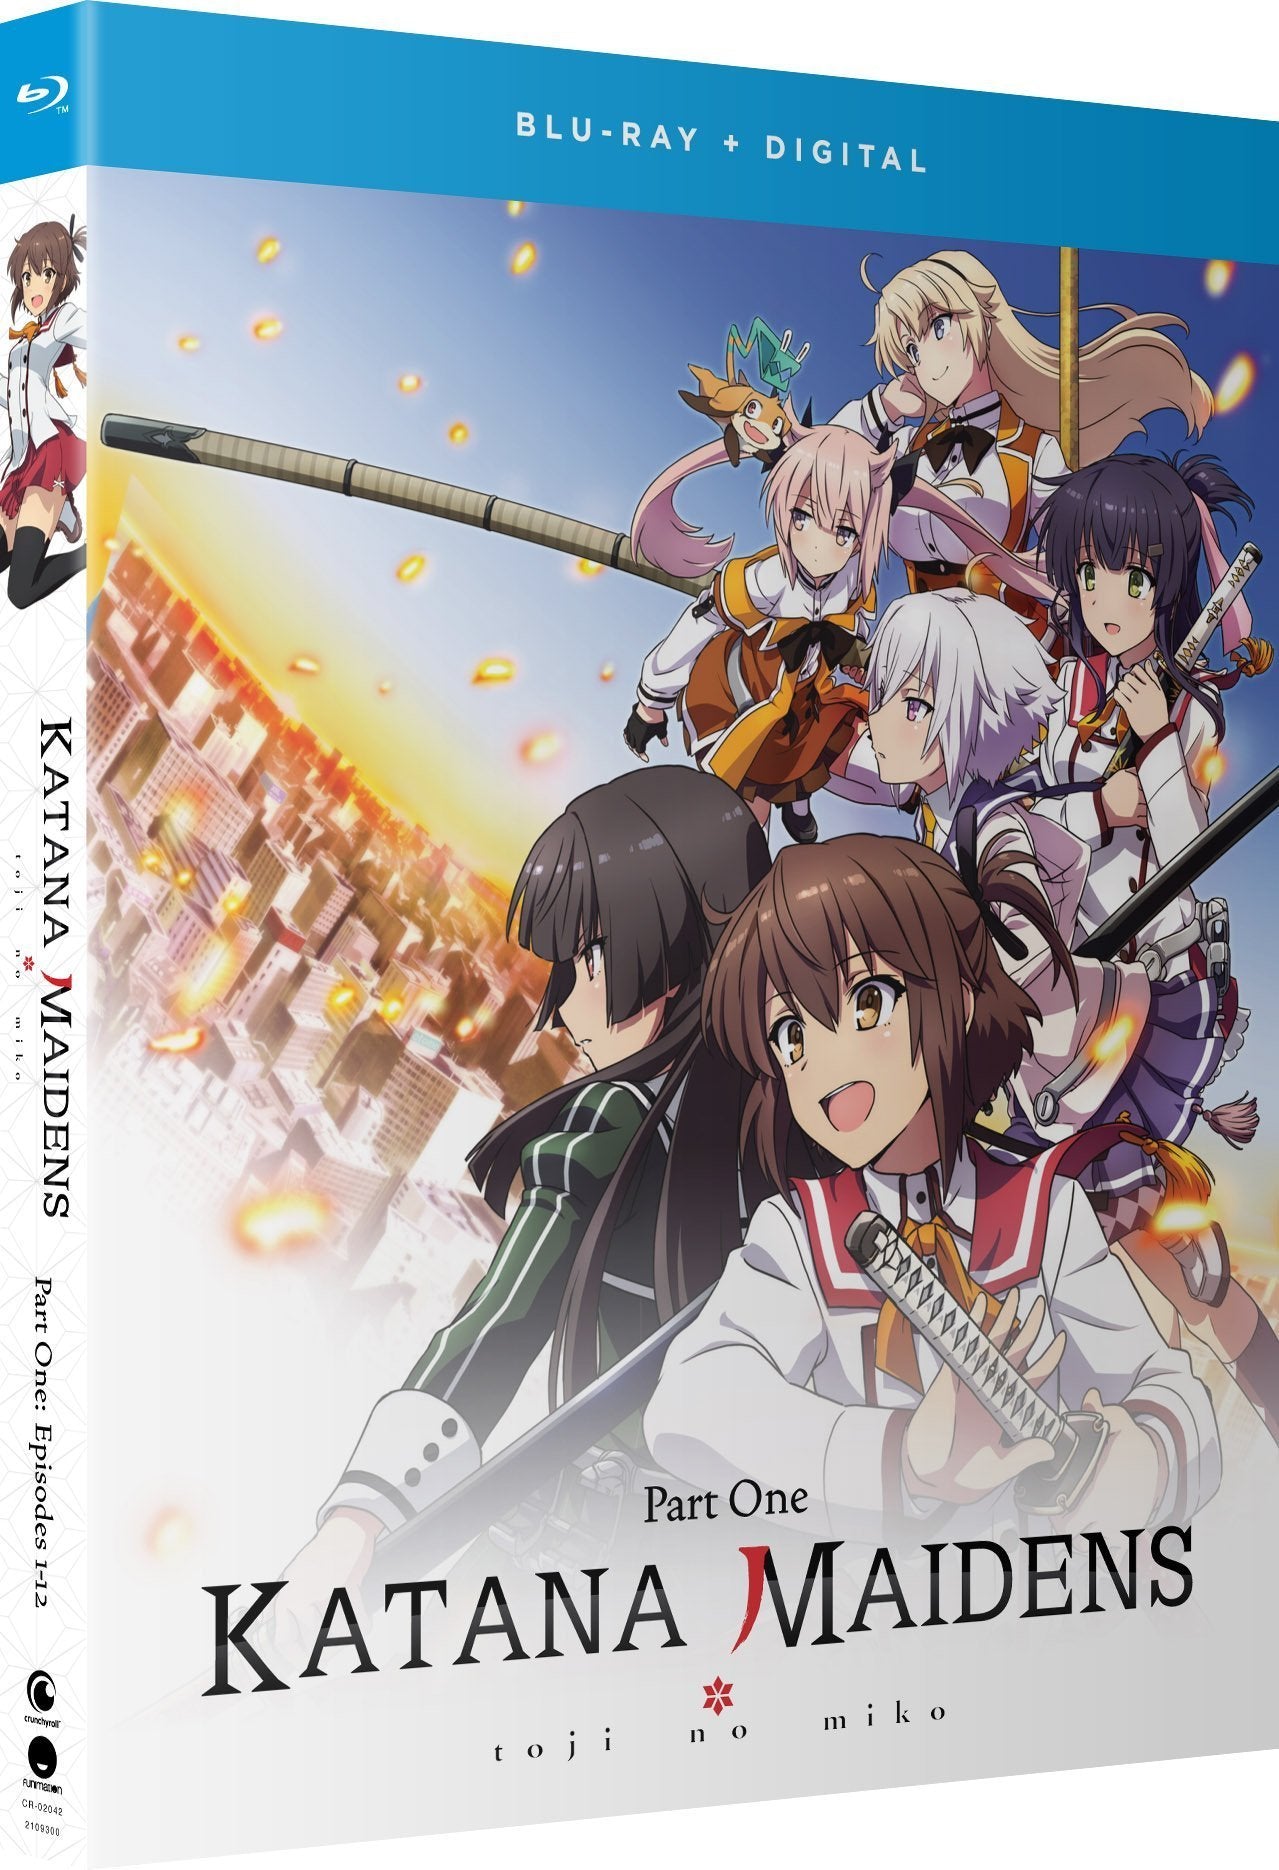 Katana Maidens Toji No Miko - Part 1 - Blu-Ray + DVD image count 1